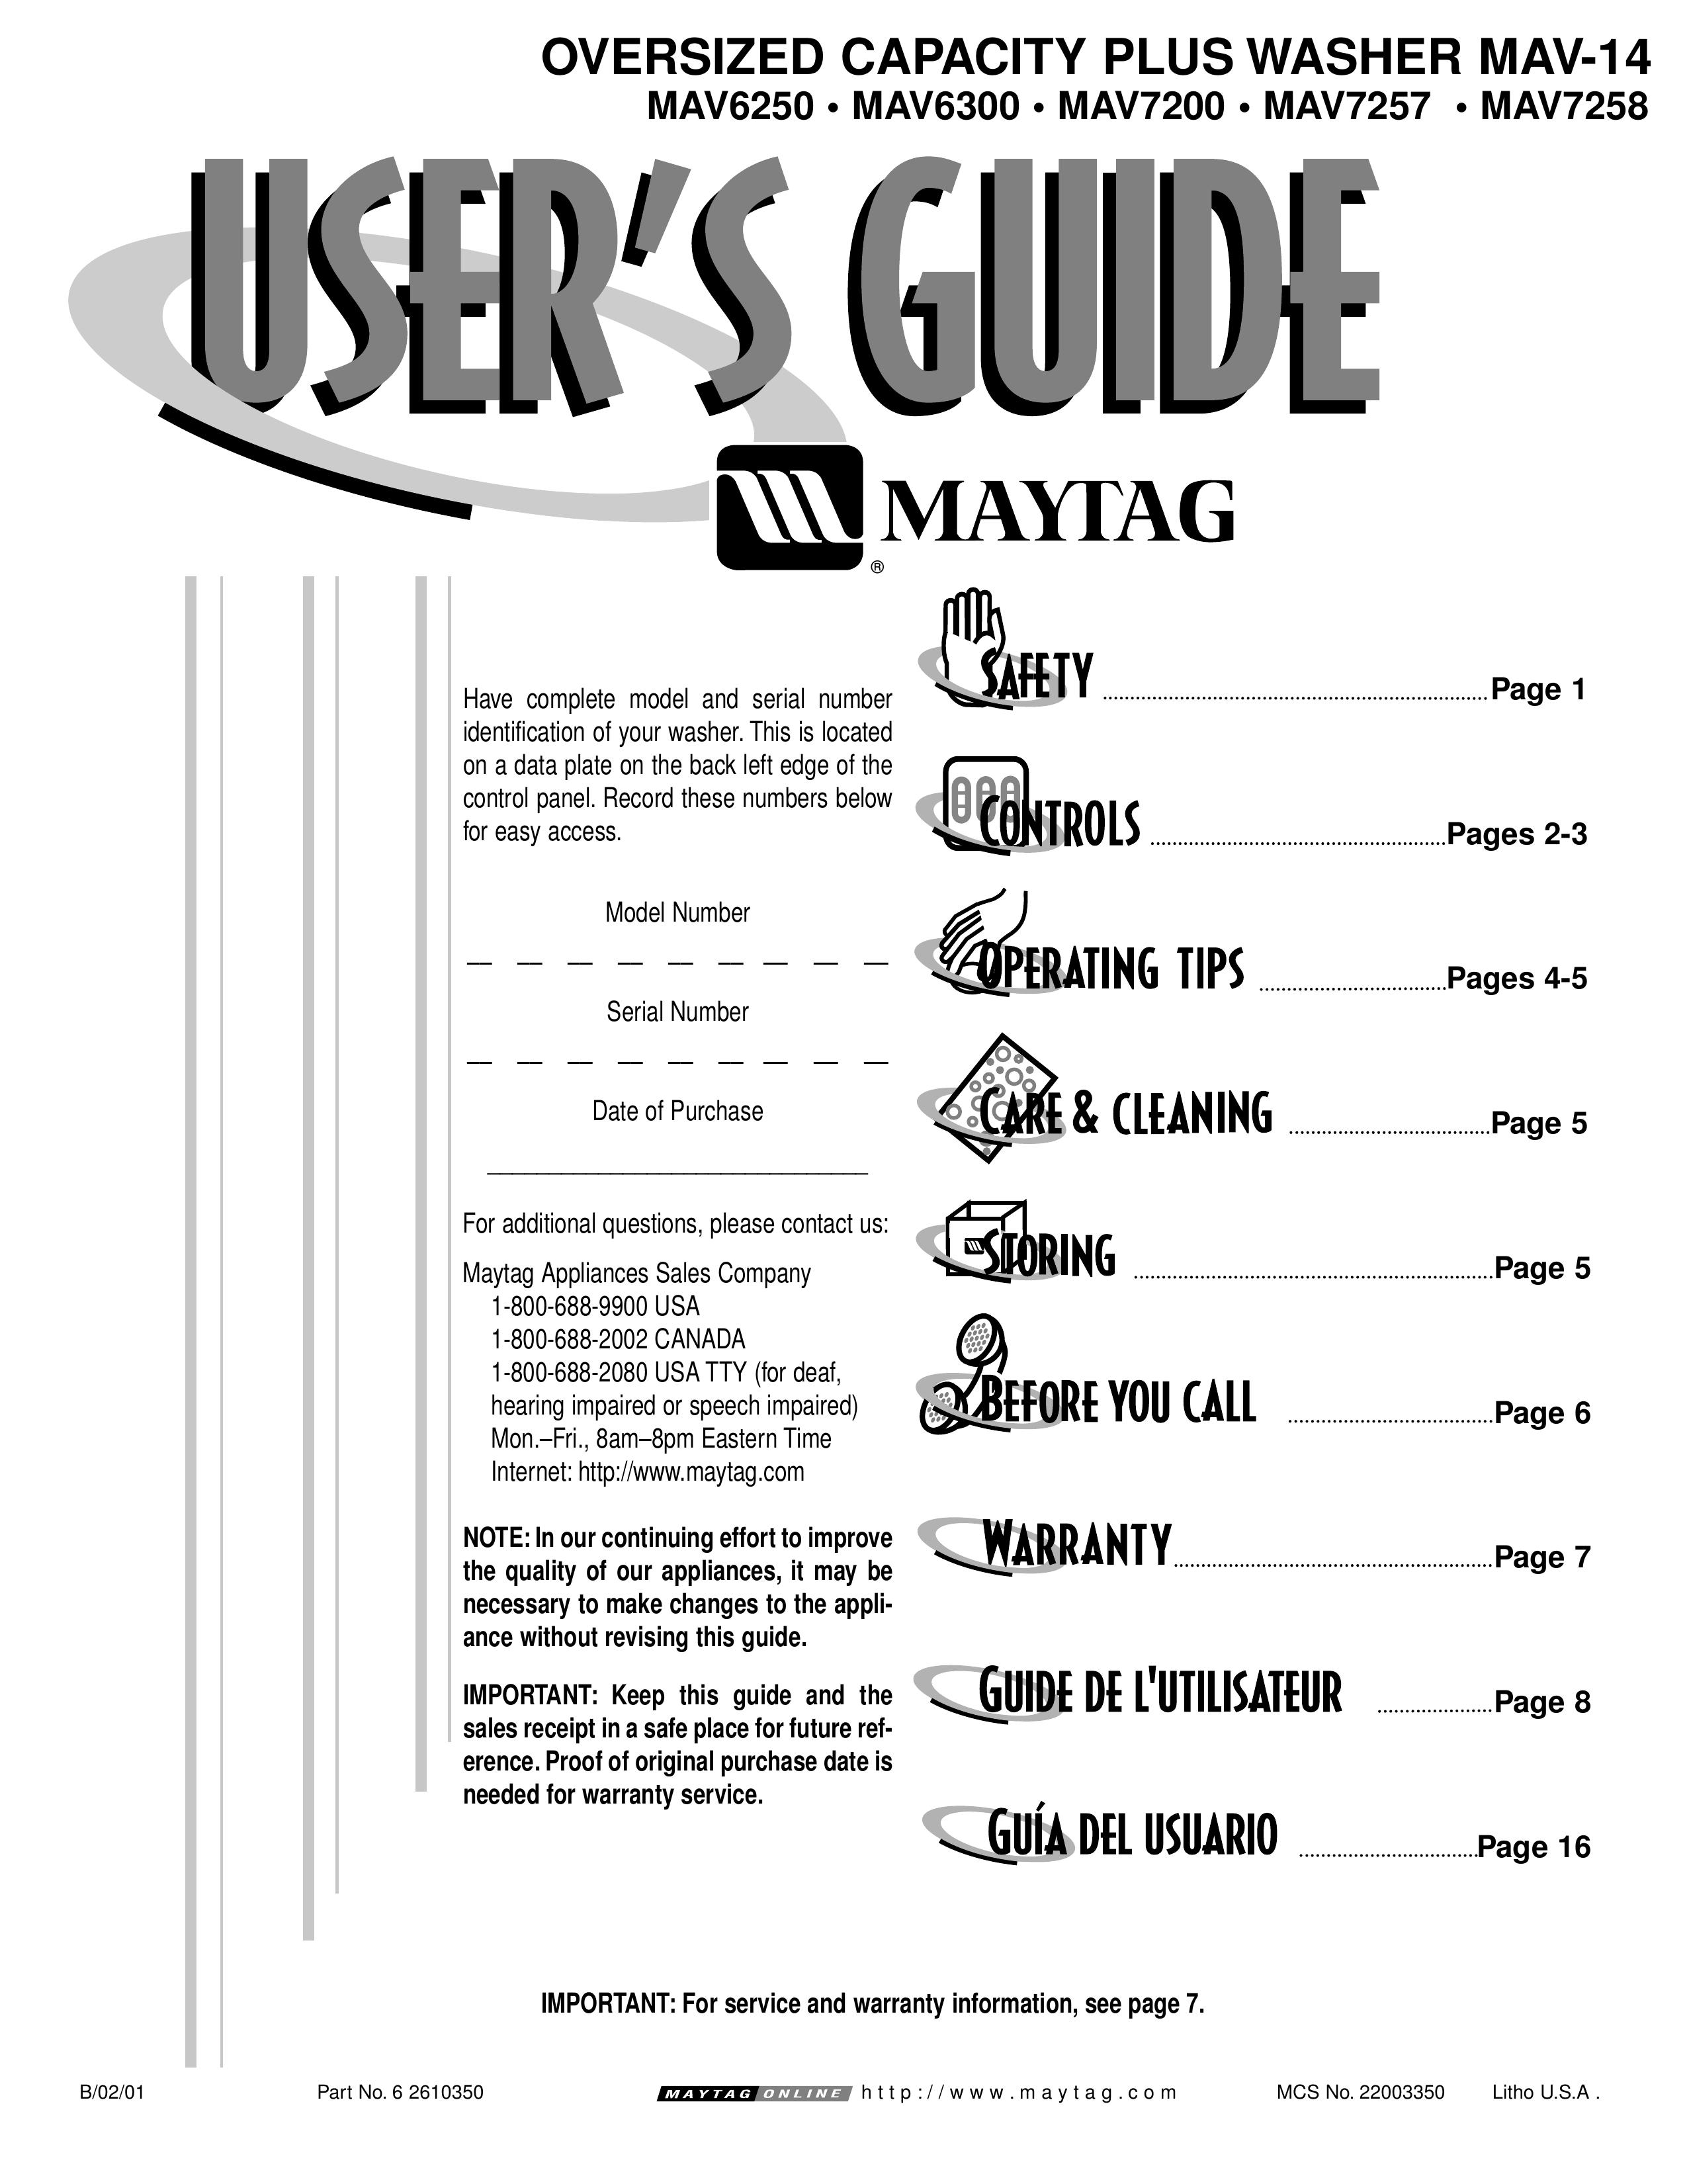 Maytag MAV6250 Washer/Dryer User Manual